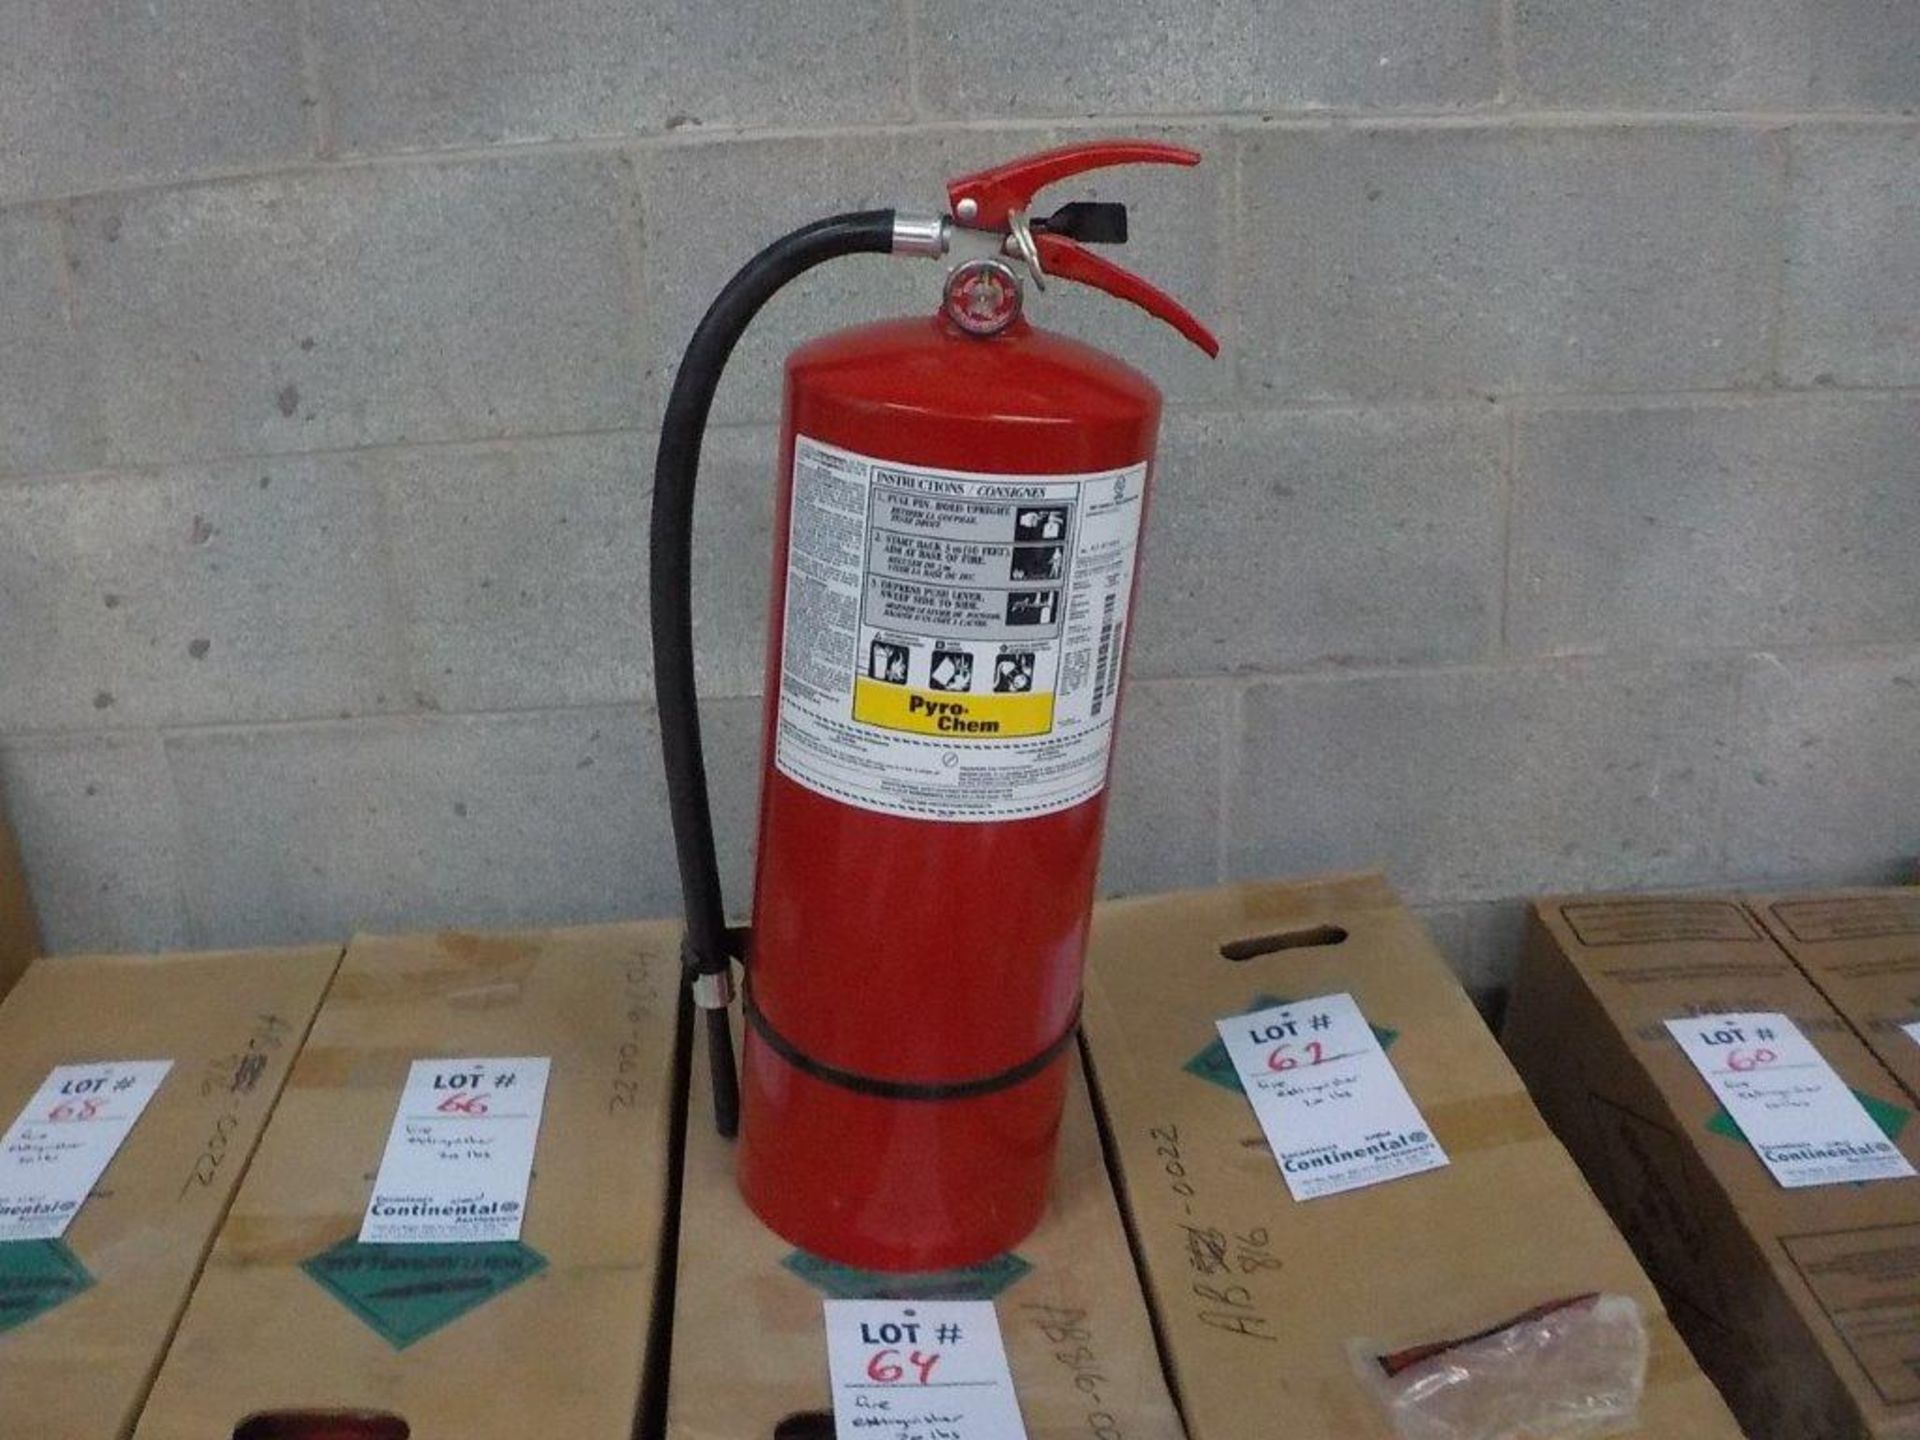 (N) extincteur - 20 lbs - fire extinguisher